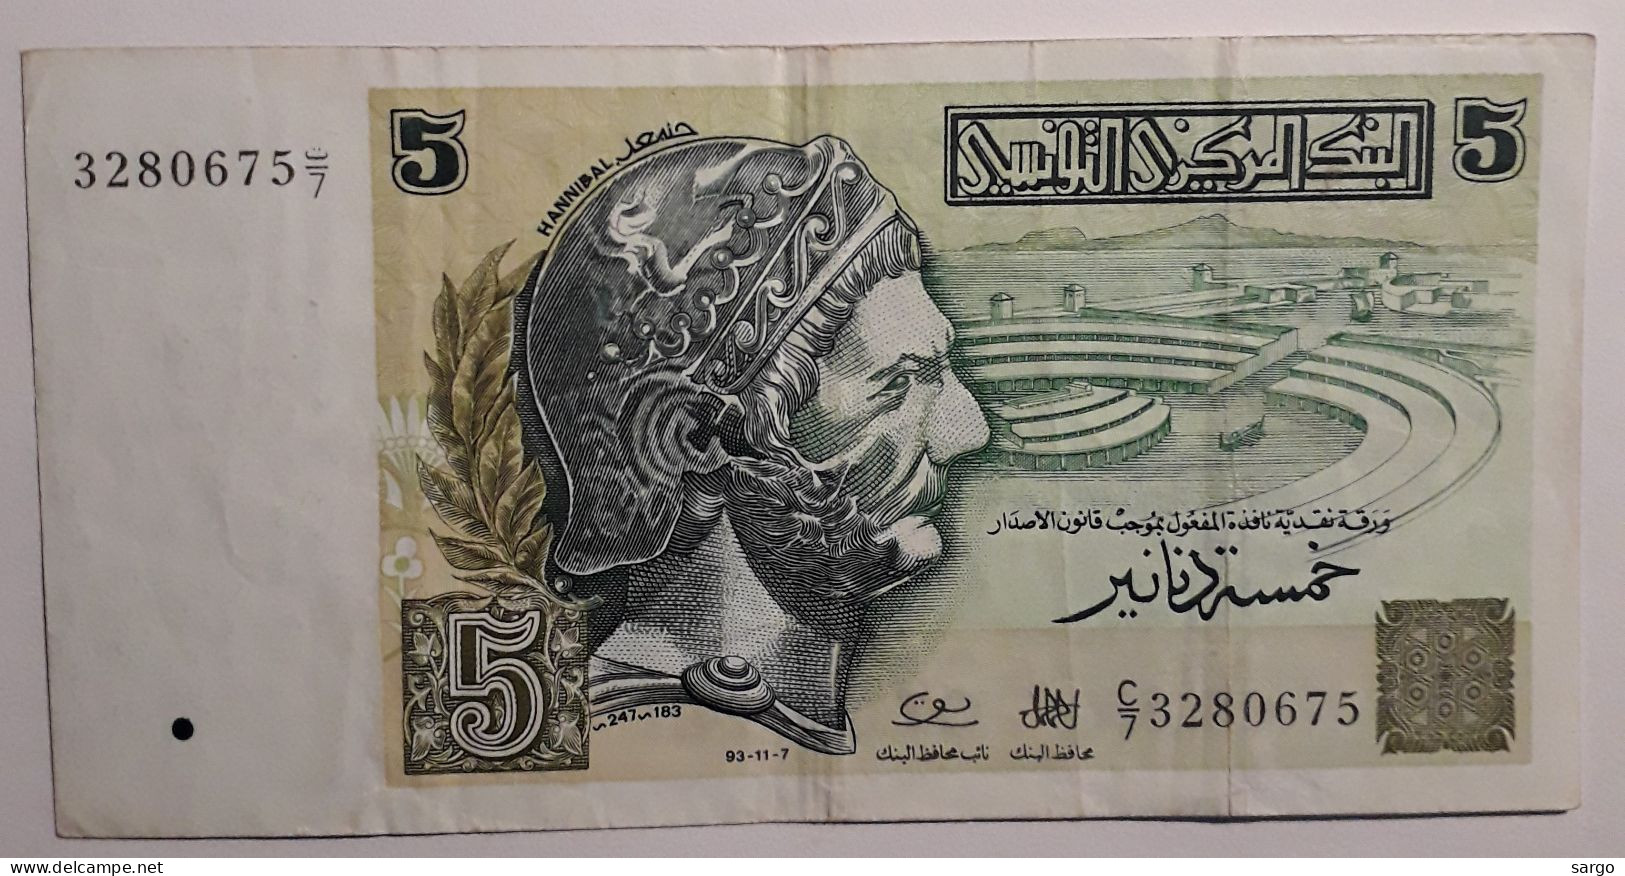 TUNISIA - 5 DINARS - 1993 - CIRC - P 86 - BANKNOTES - PAPER MONEY - CARTAMONETA - - Tunesien